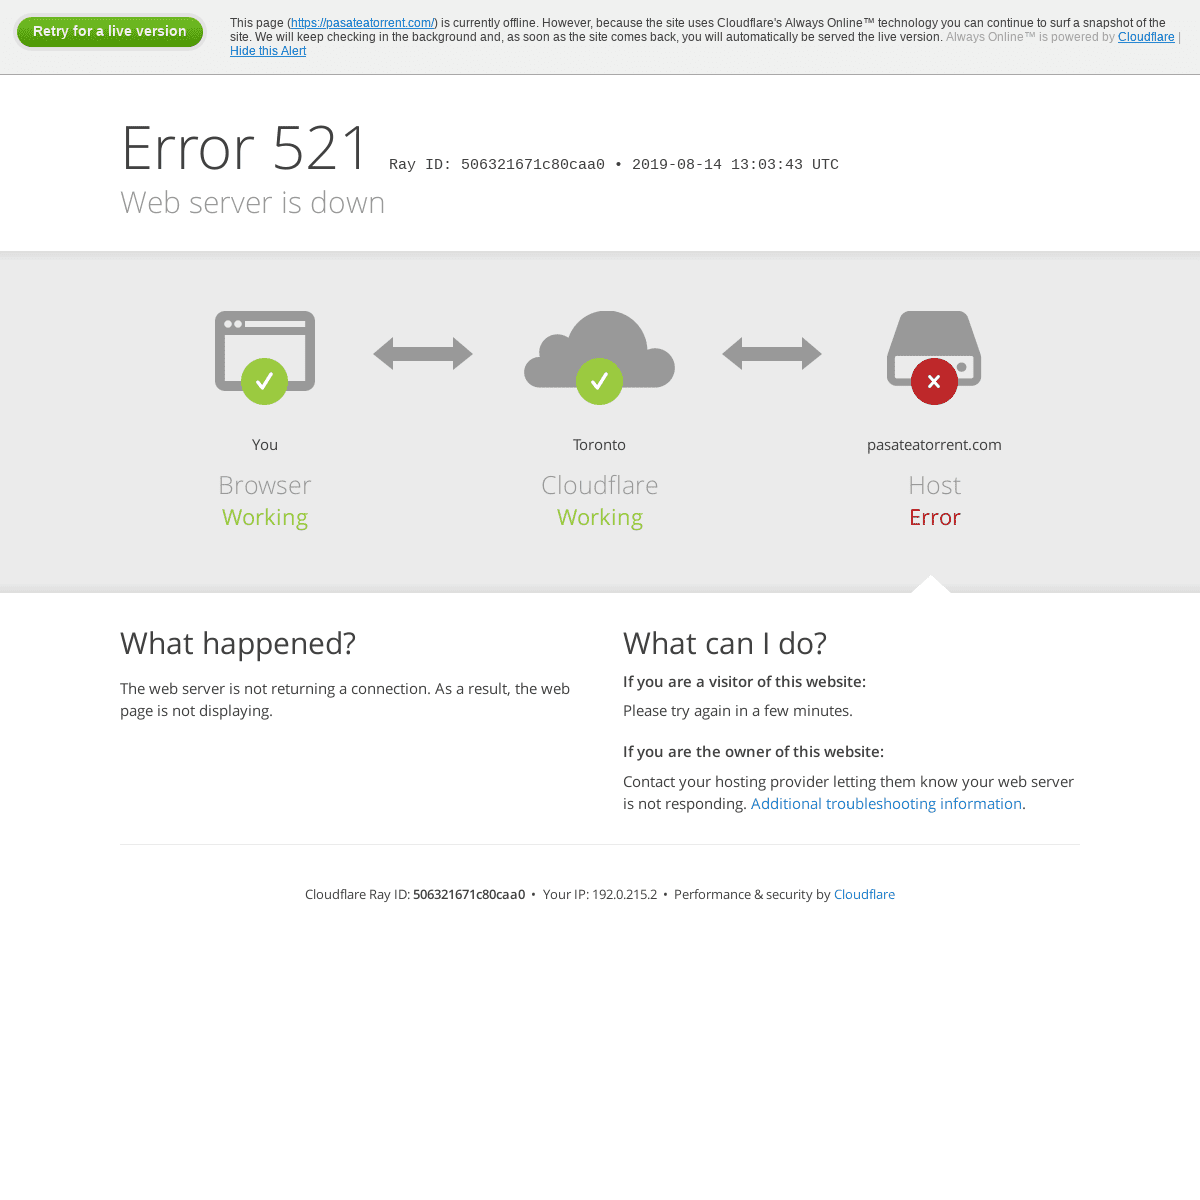 pasateatorrent.com | 521: Web server is down